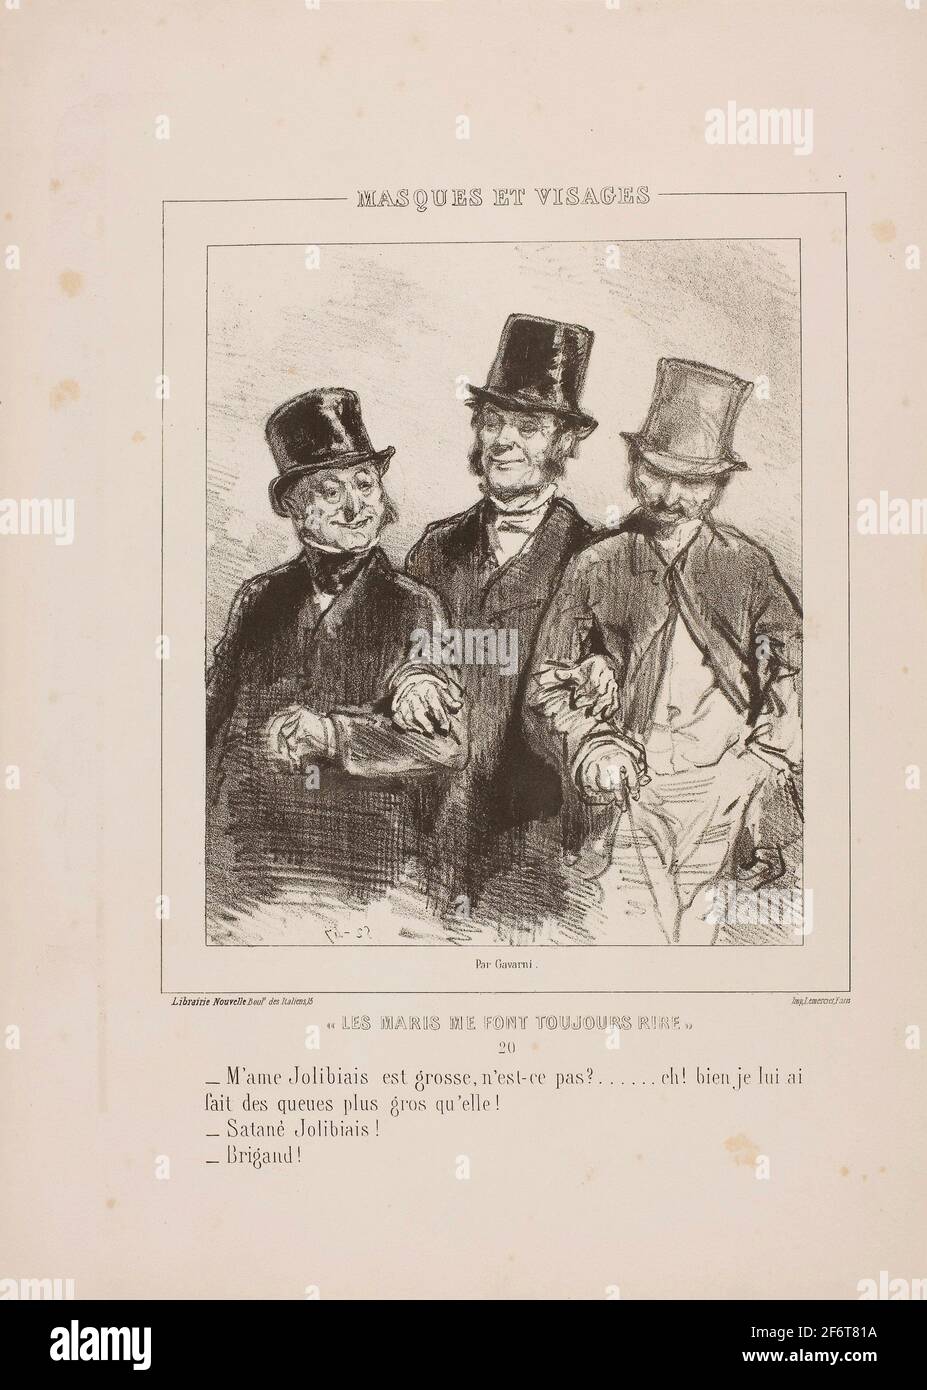 Author: Paul Gavarni. Les maris me font toujours rire: M'ame Jolibiais est grosse. - 1853 - Paul Gavarni French, 1804-1866. Lithograph in black on Stock Photo